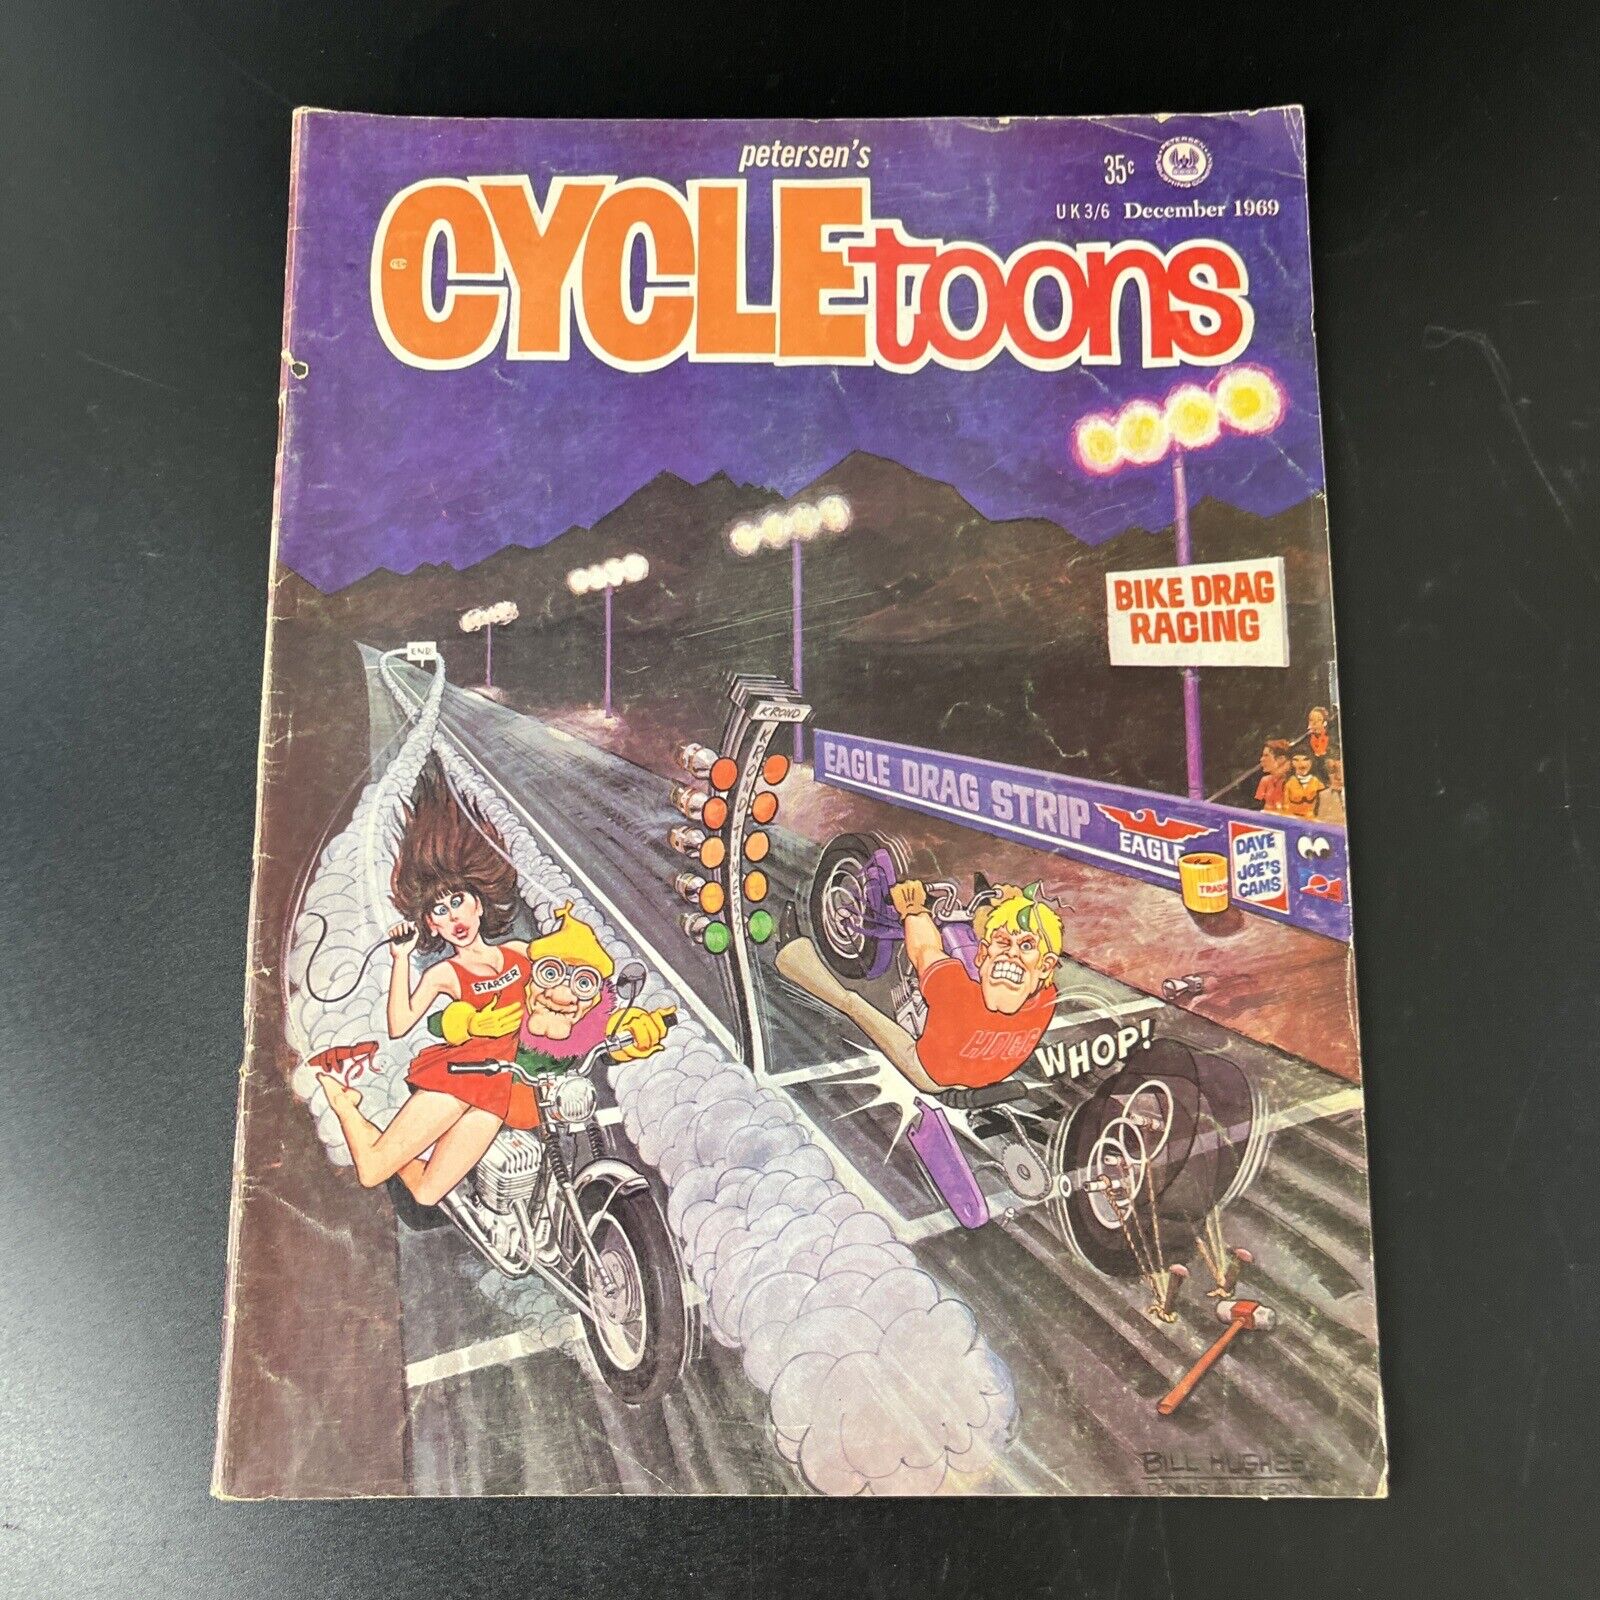 Vintage December 1969 Petersen's Cycle Toons Comics Magazine 35 Cents Bike Drag